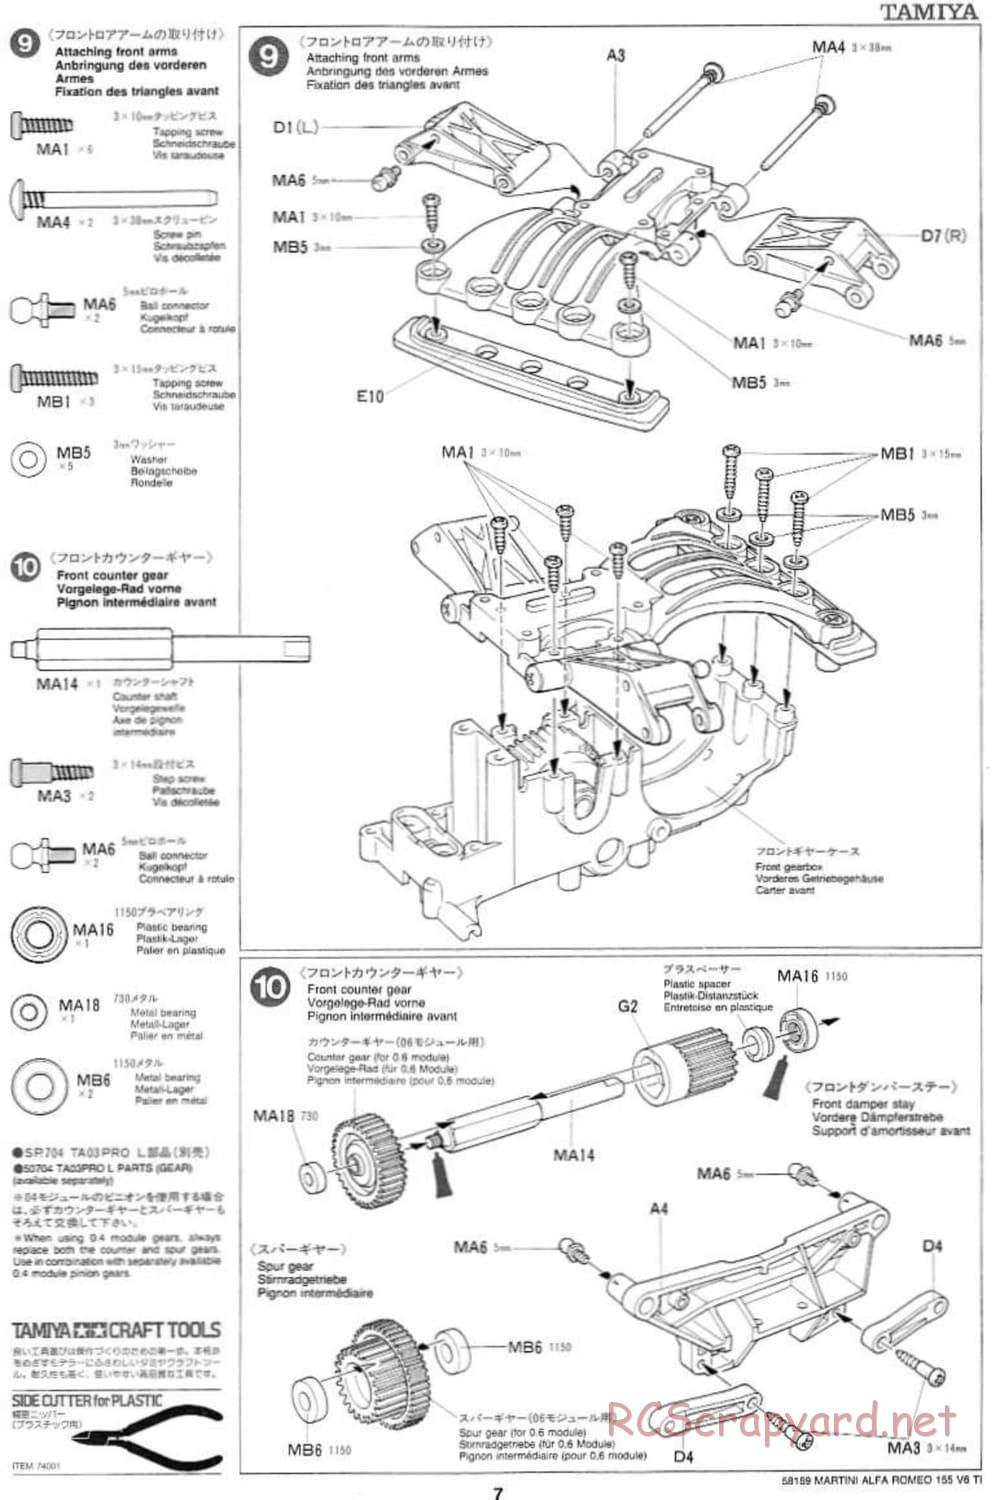 Tamiya - Martini Alfa Romeo 155 V6 TI - TA-03F Chassis - Manual - Page 7